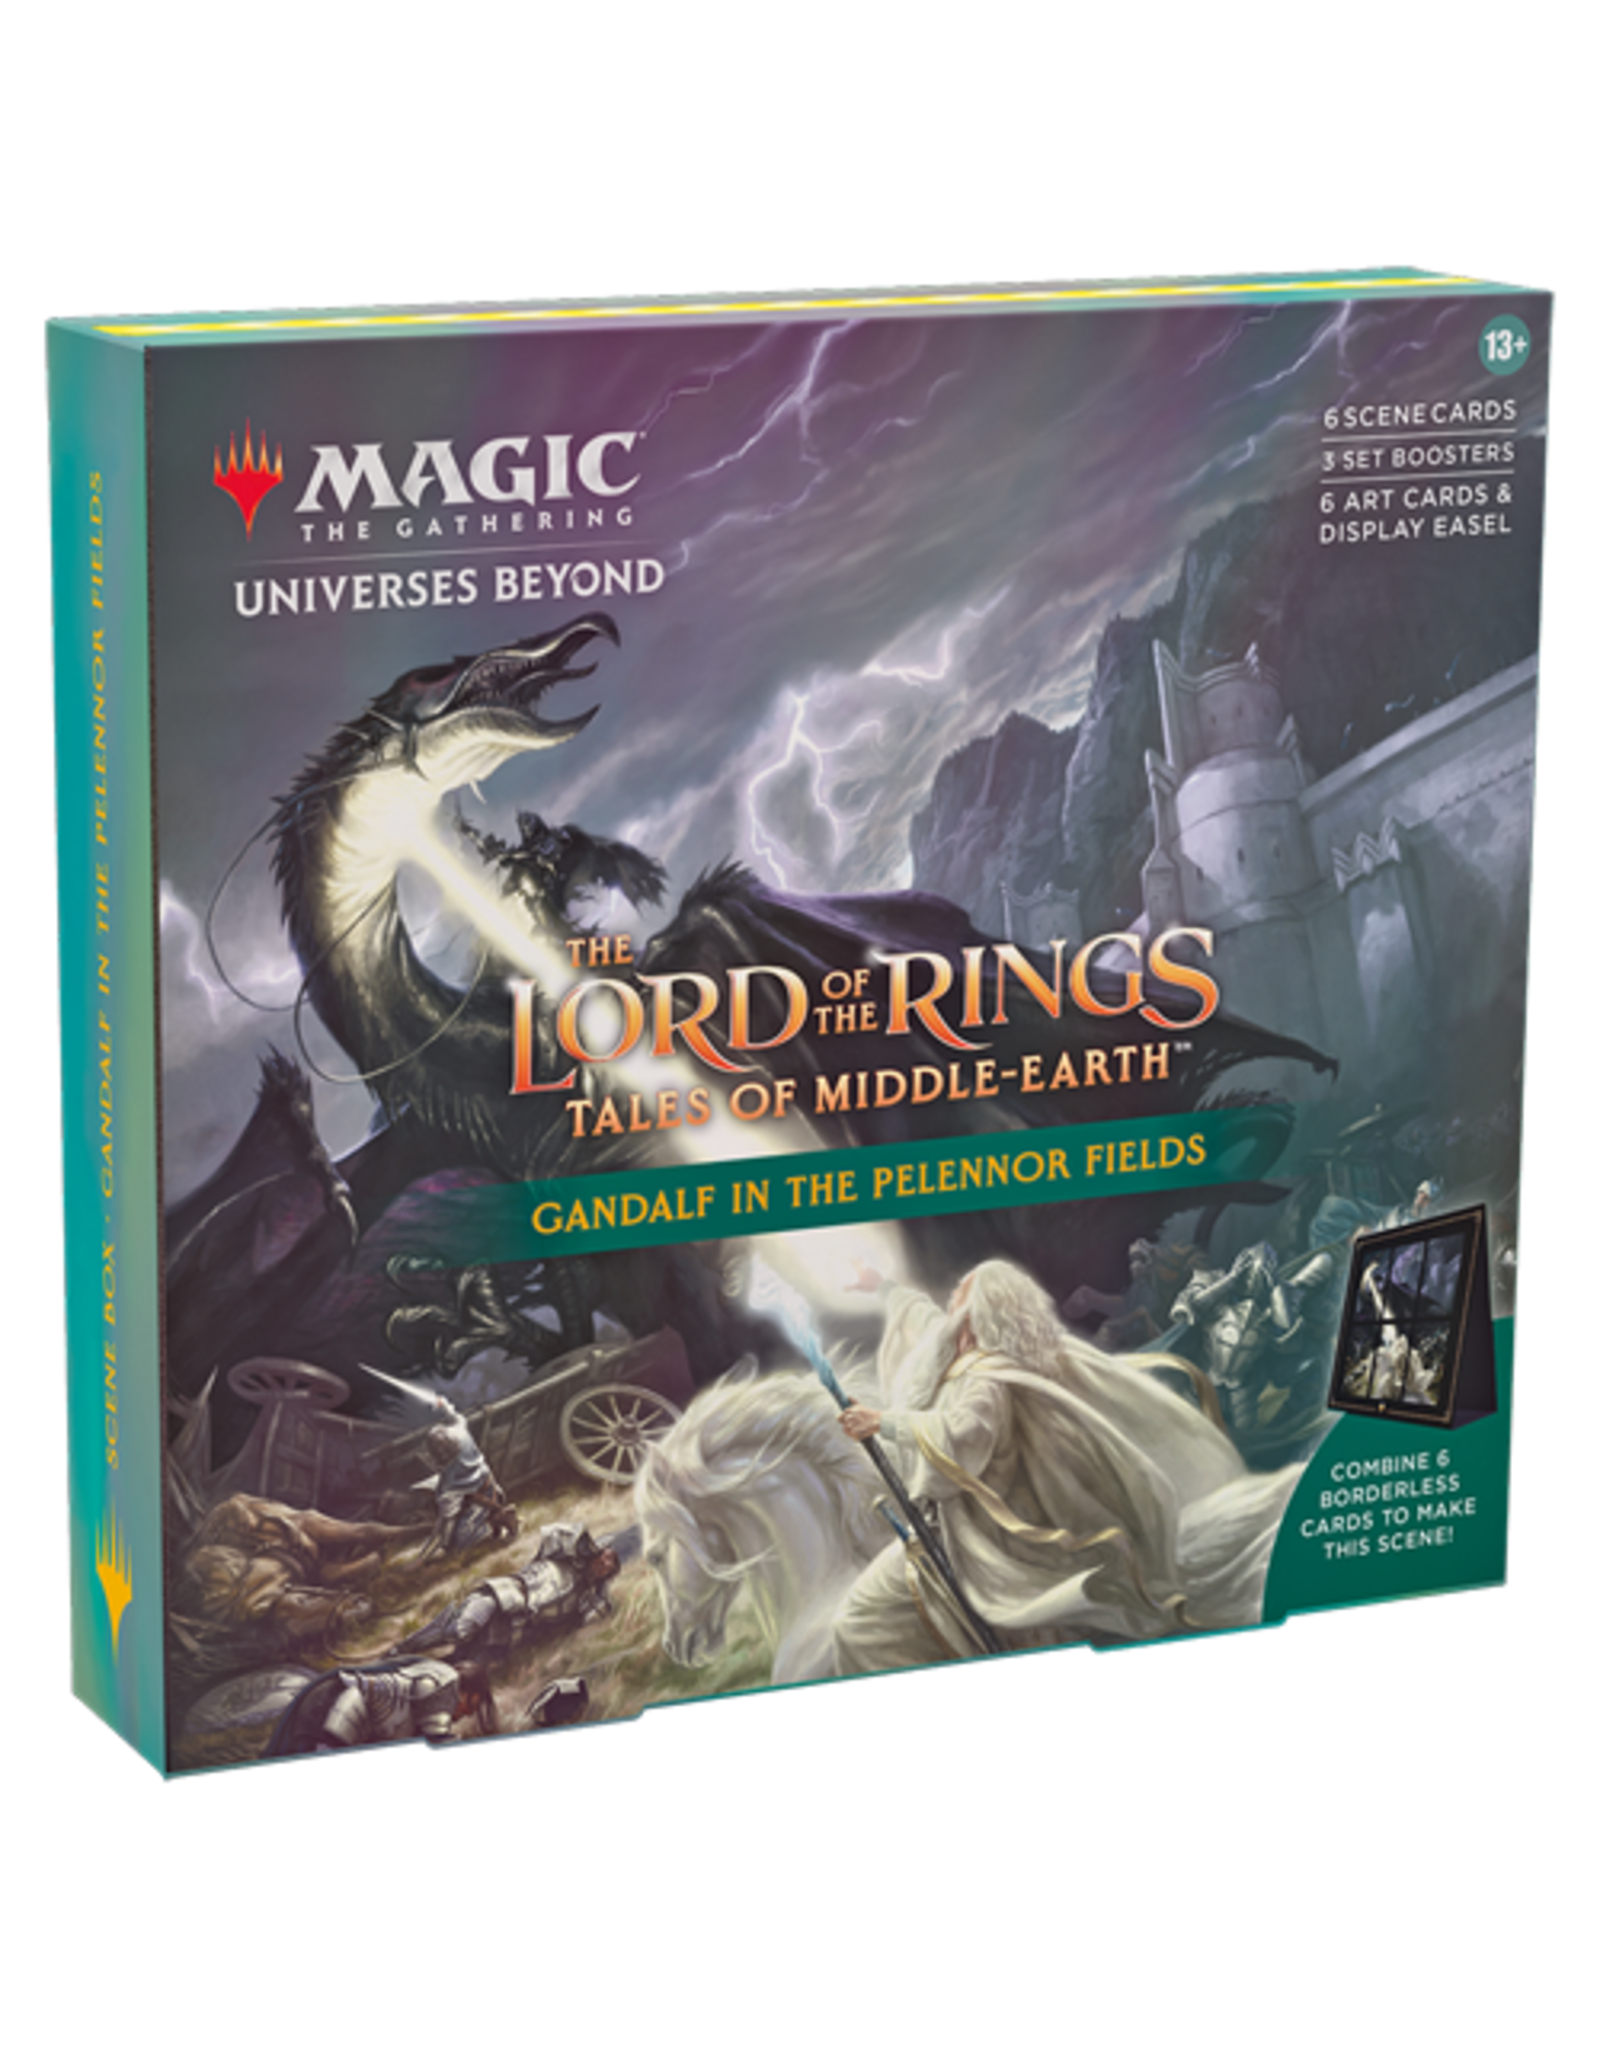 Magic LOTR Scene Box Gandalf